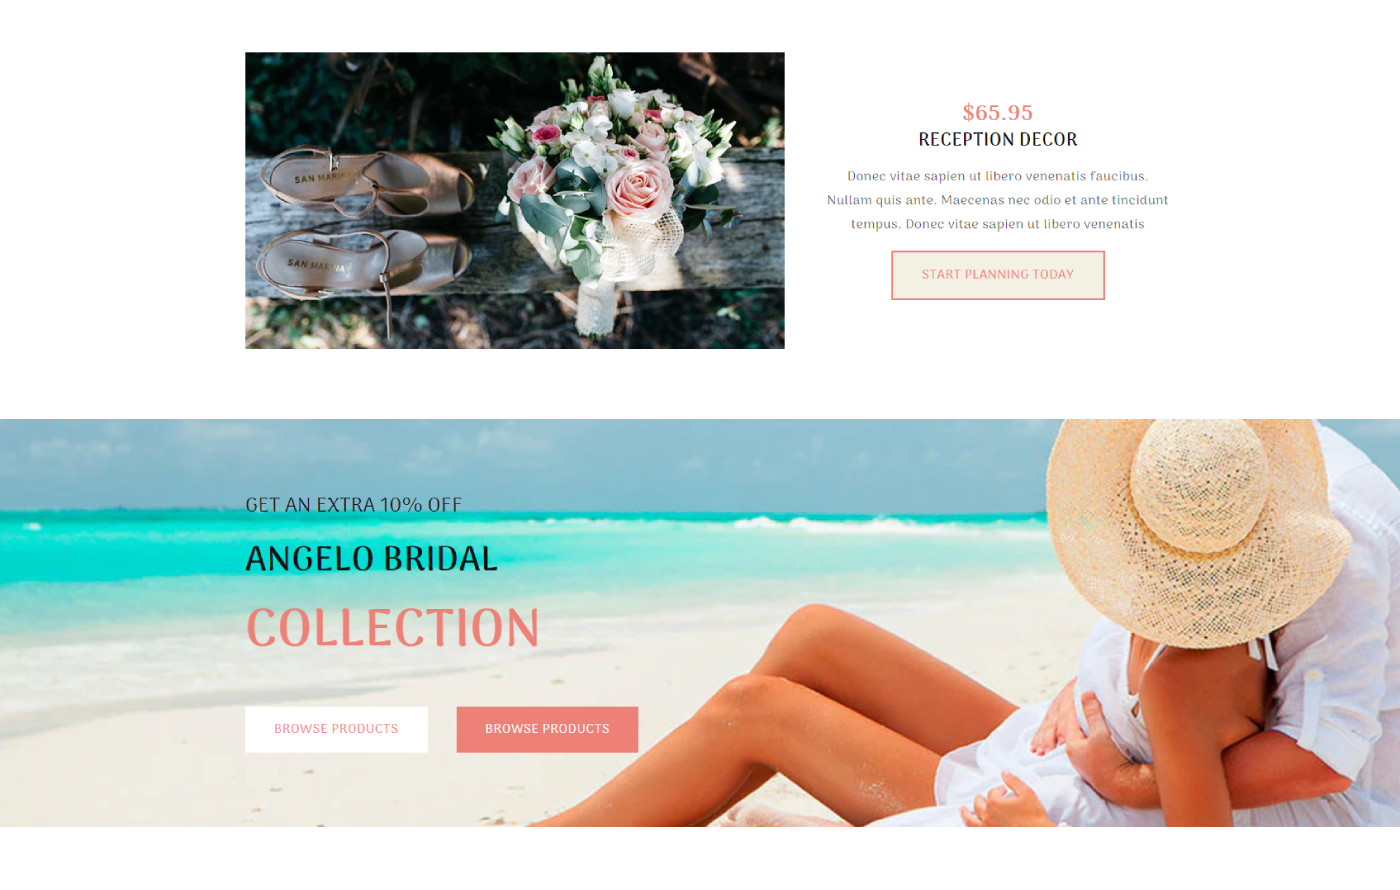 Weddingify - Wedding Dress Fashion Shopify template built by Pagefly